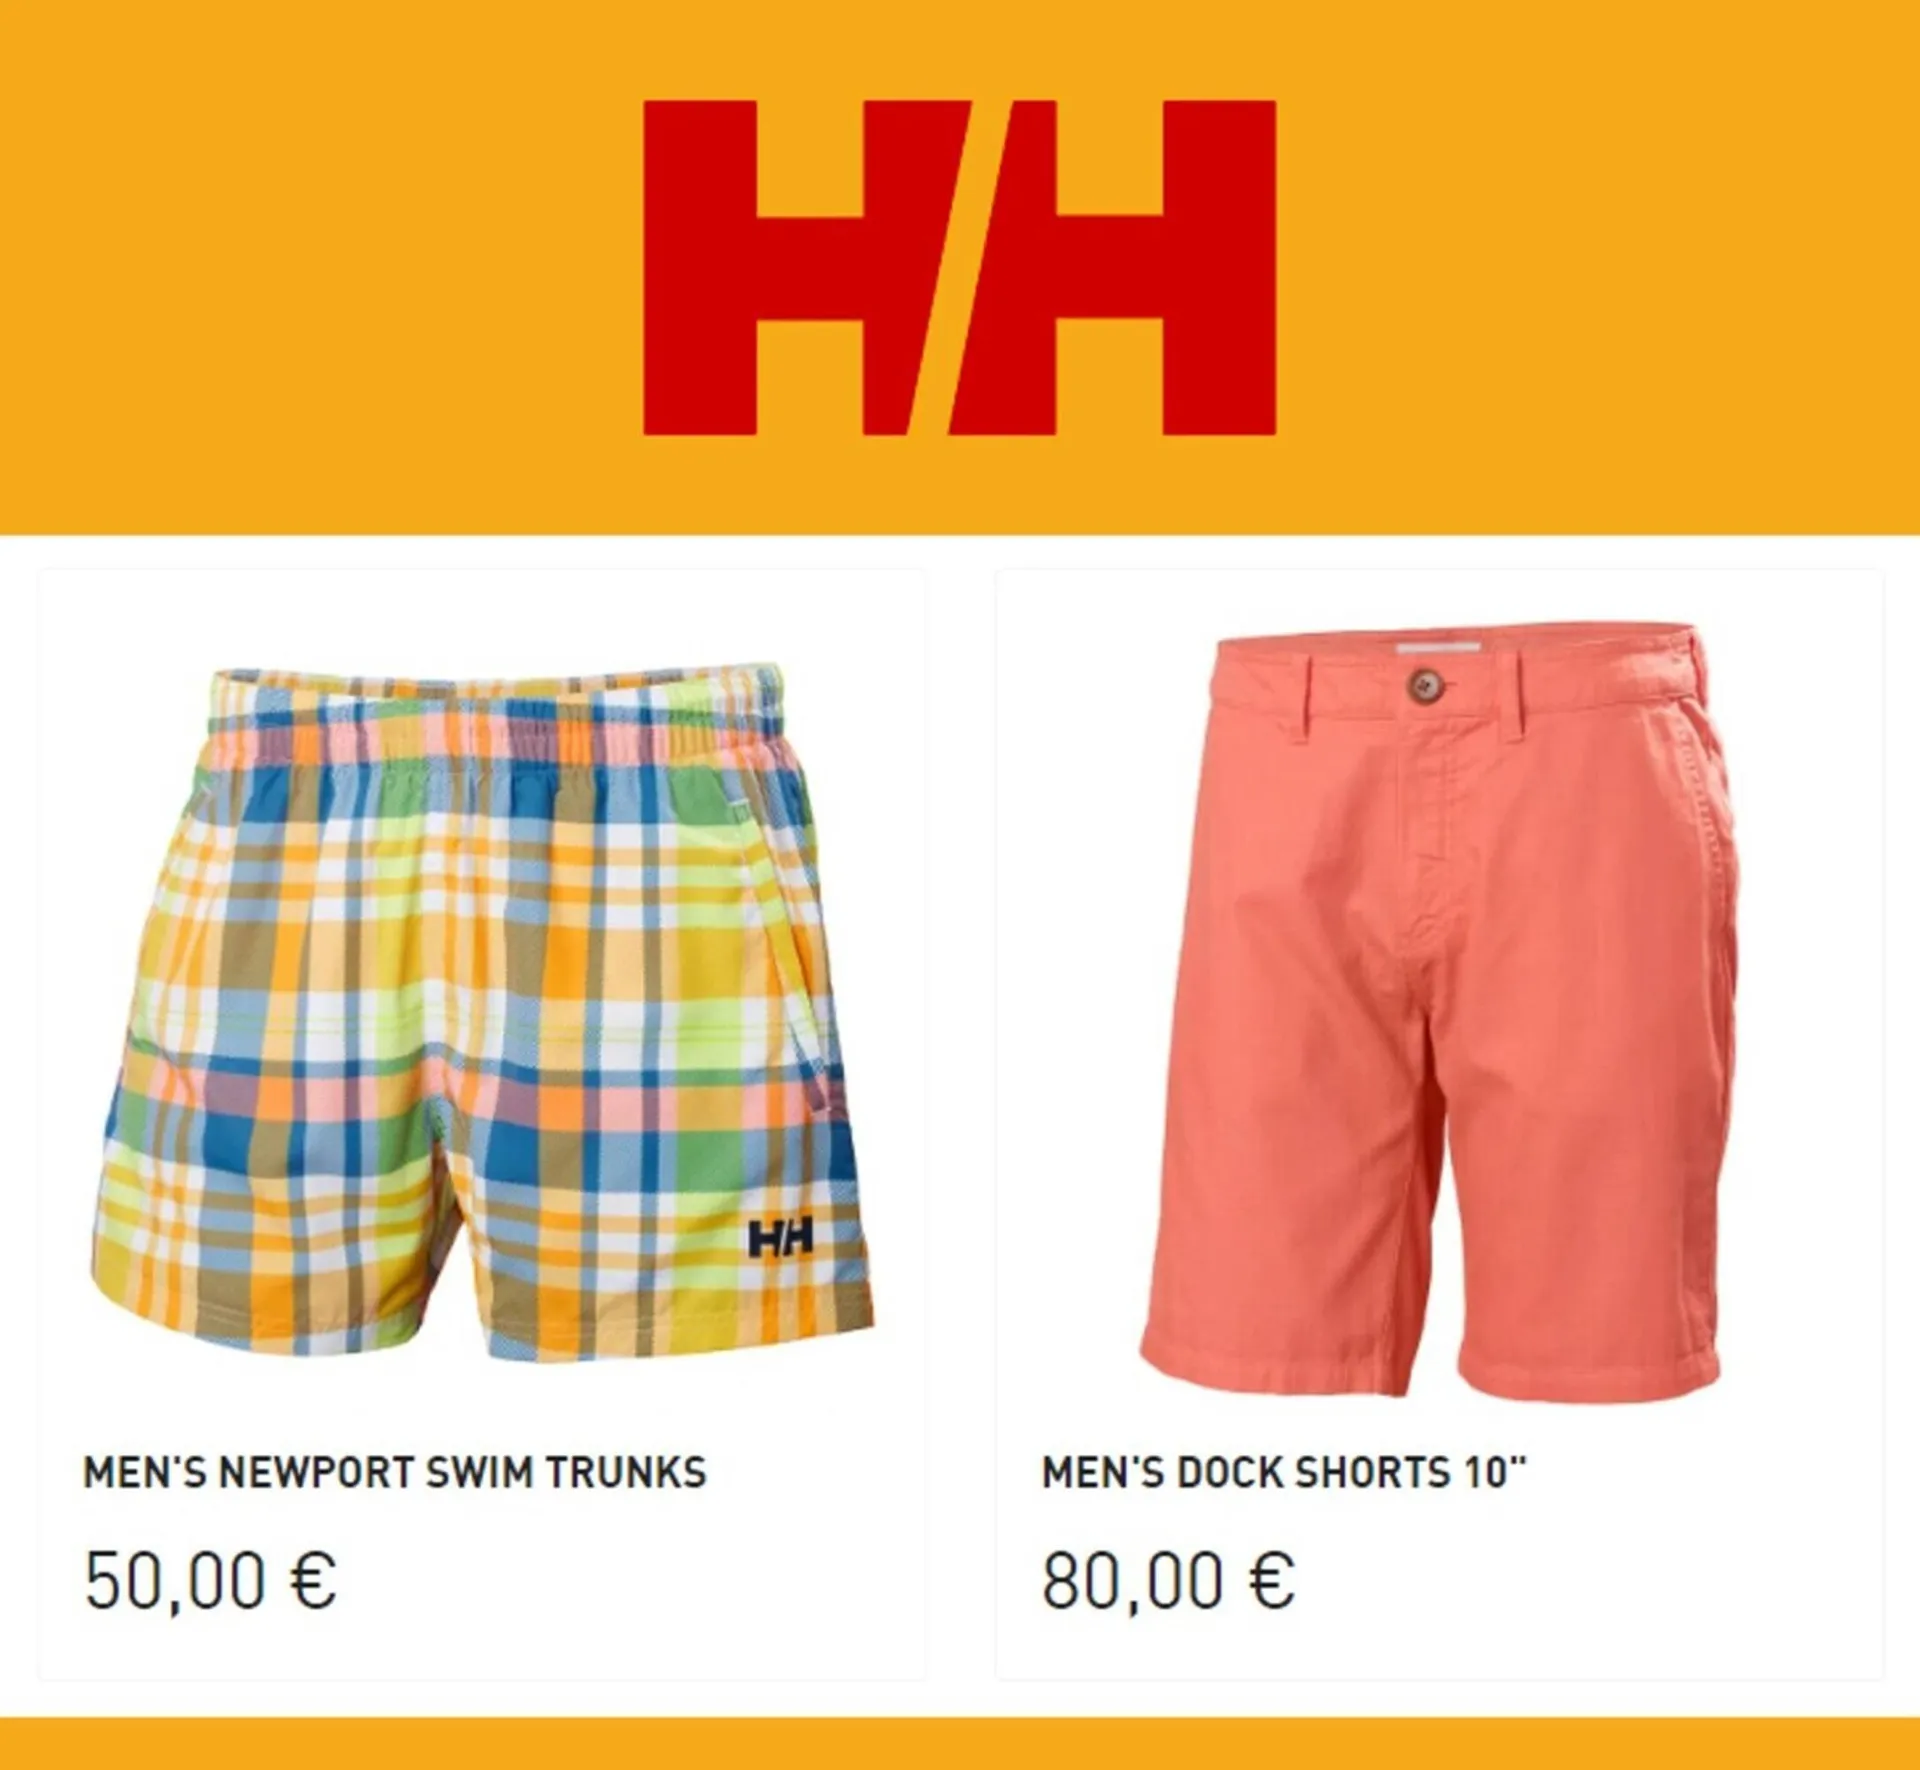 Catalogue Helly Hansen - 2